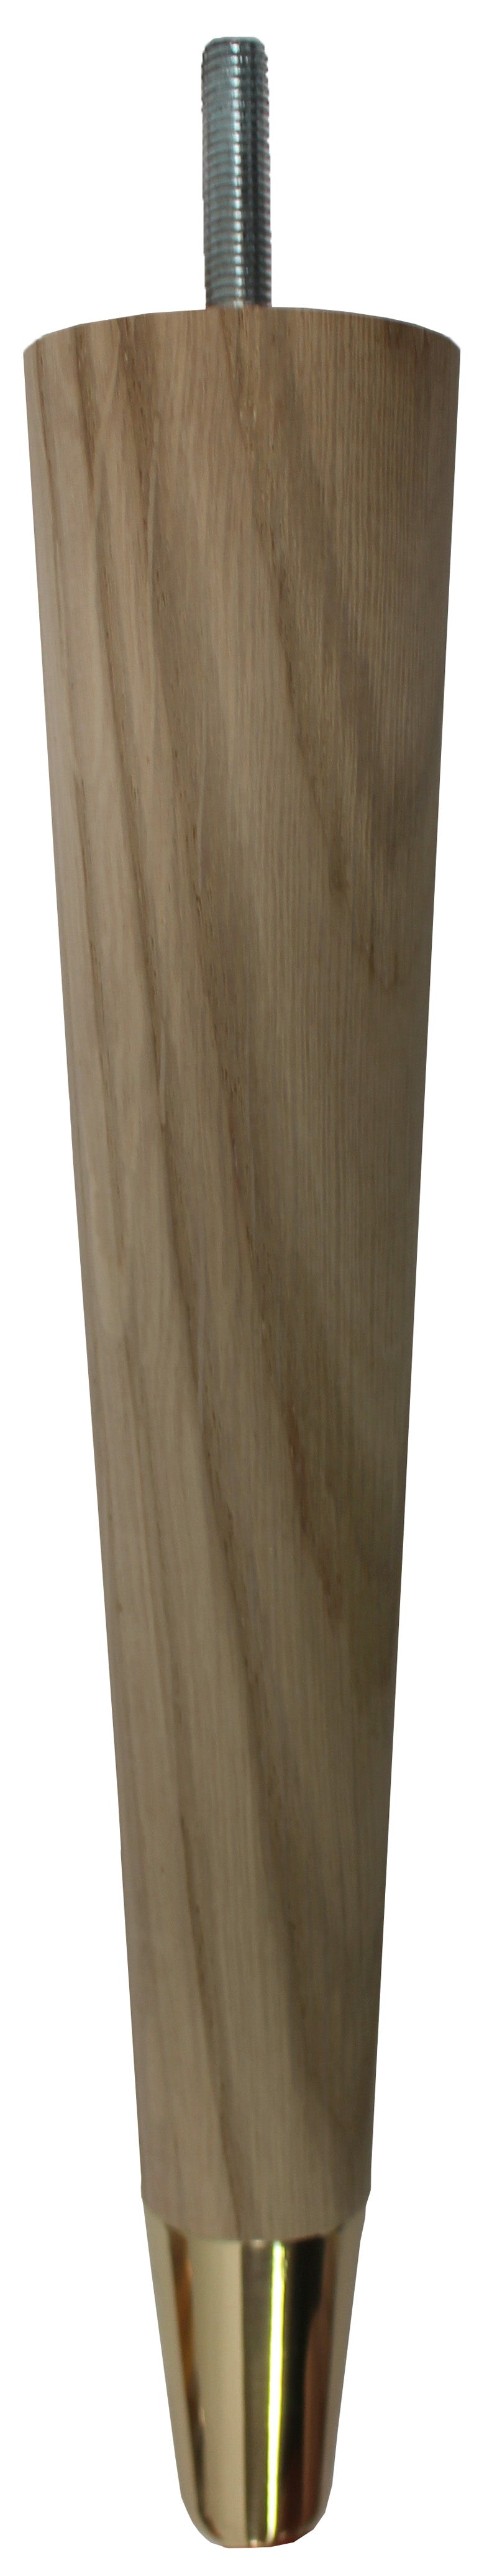 Liva Solid Oak Tapered Furniture Legs - Raw Finish - Brass Slipper Cups - Set of 4